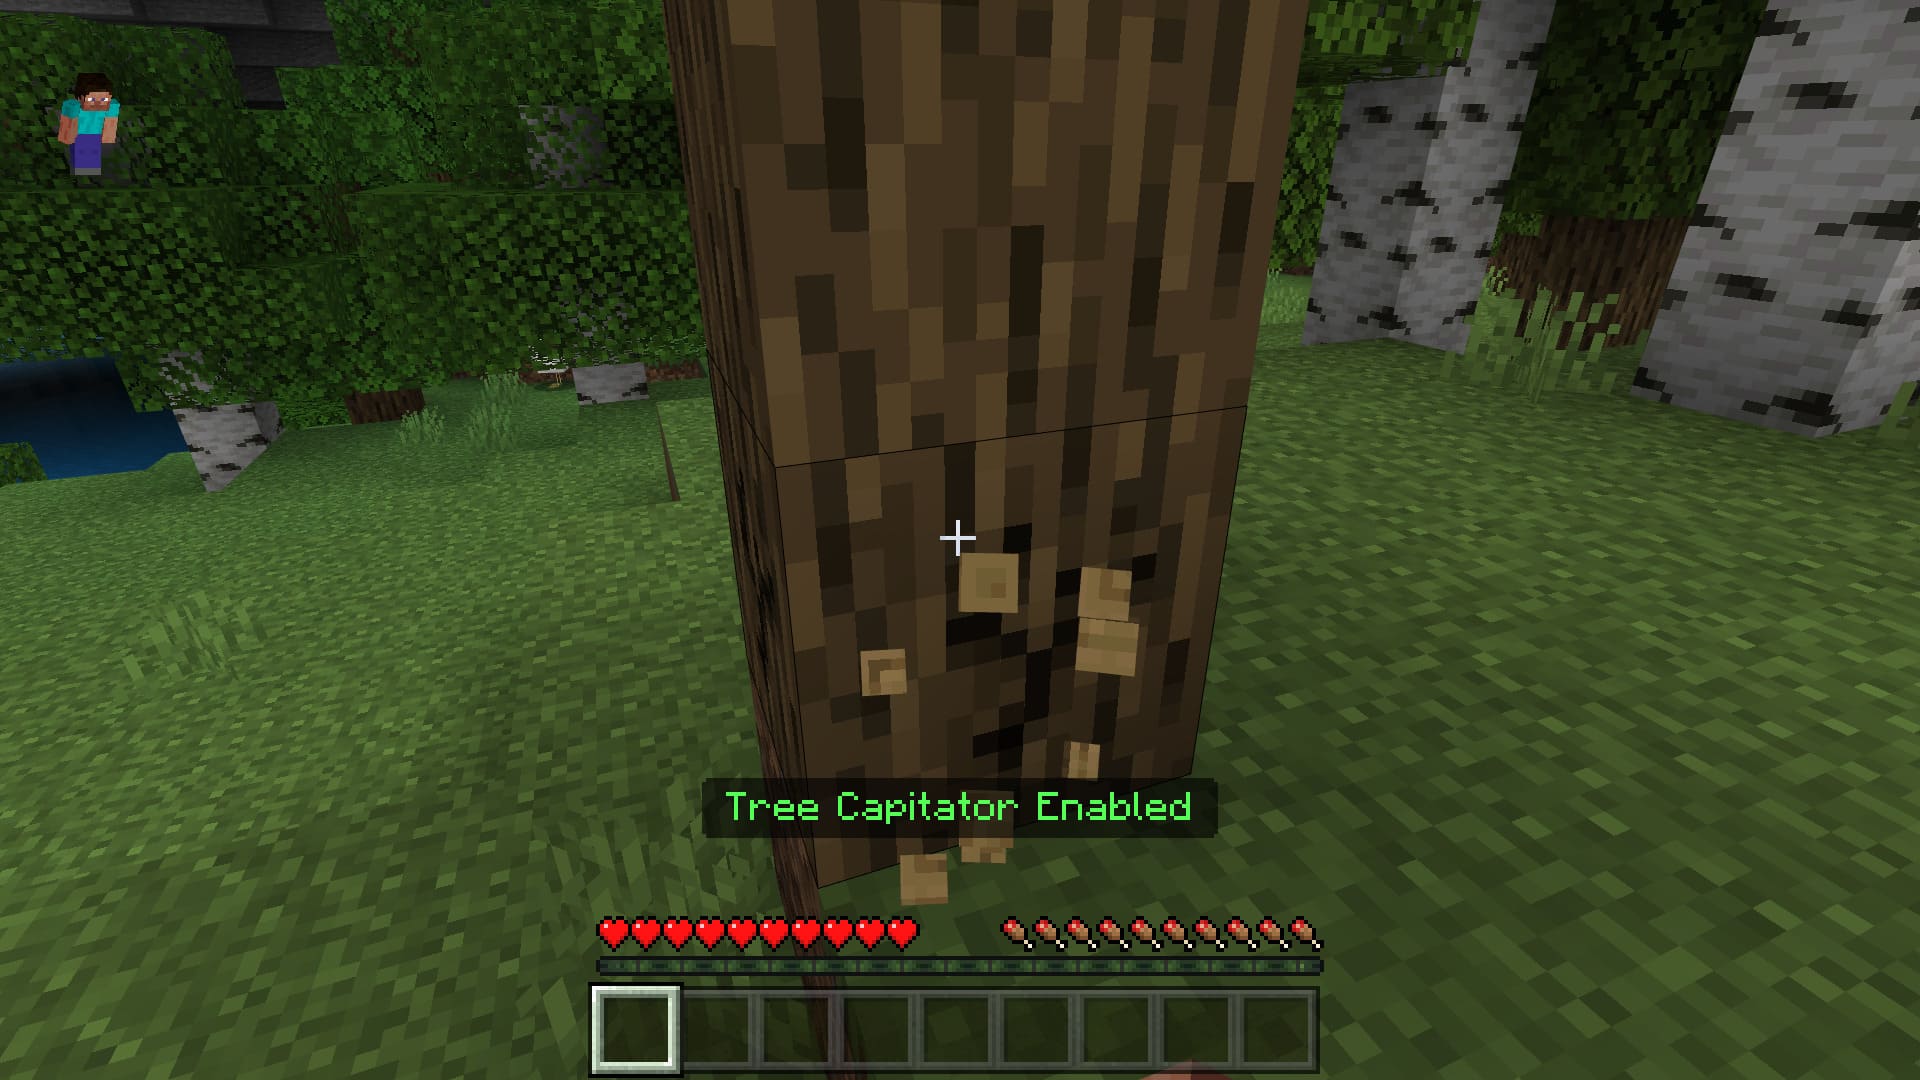 Tree Capitator mod in Minecraft